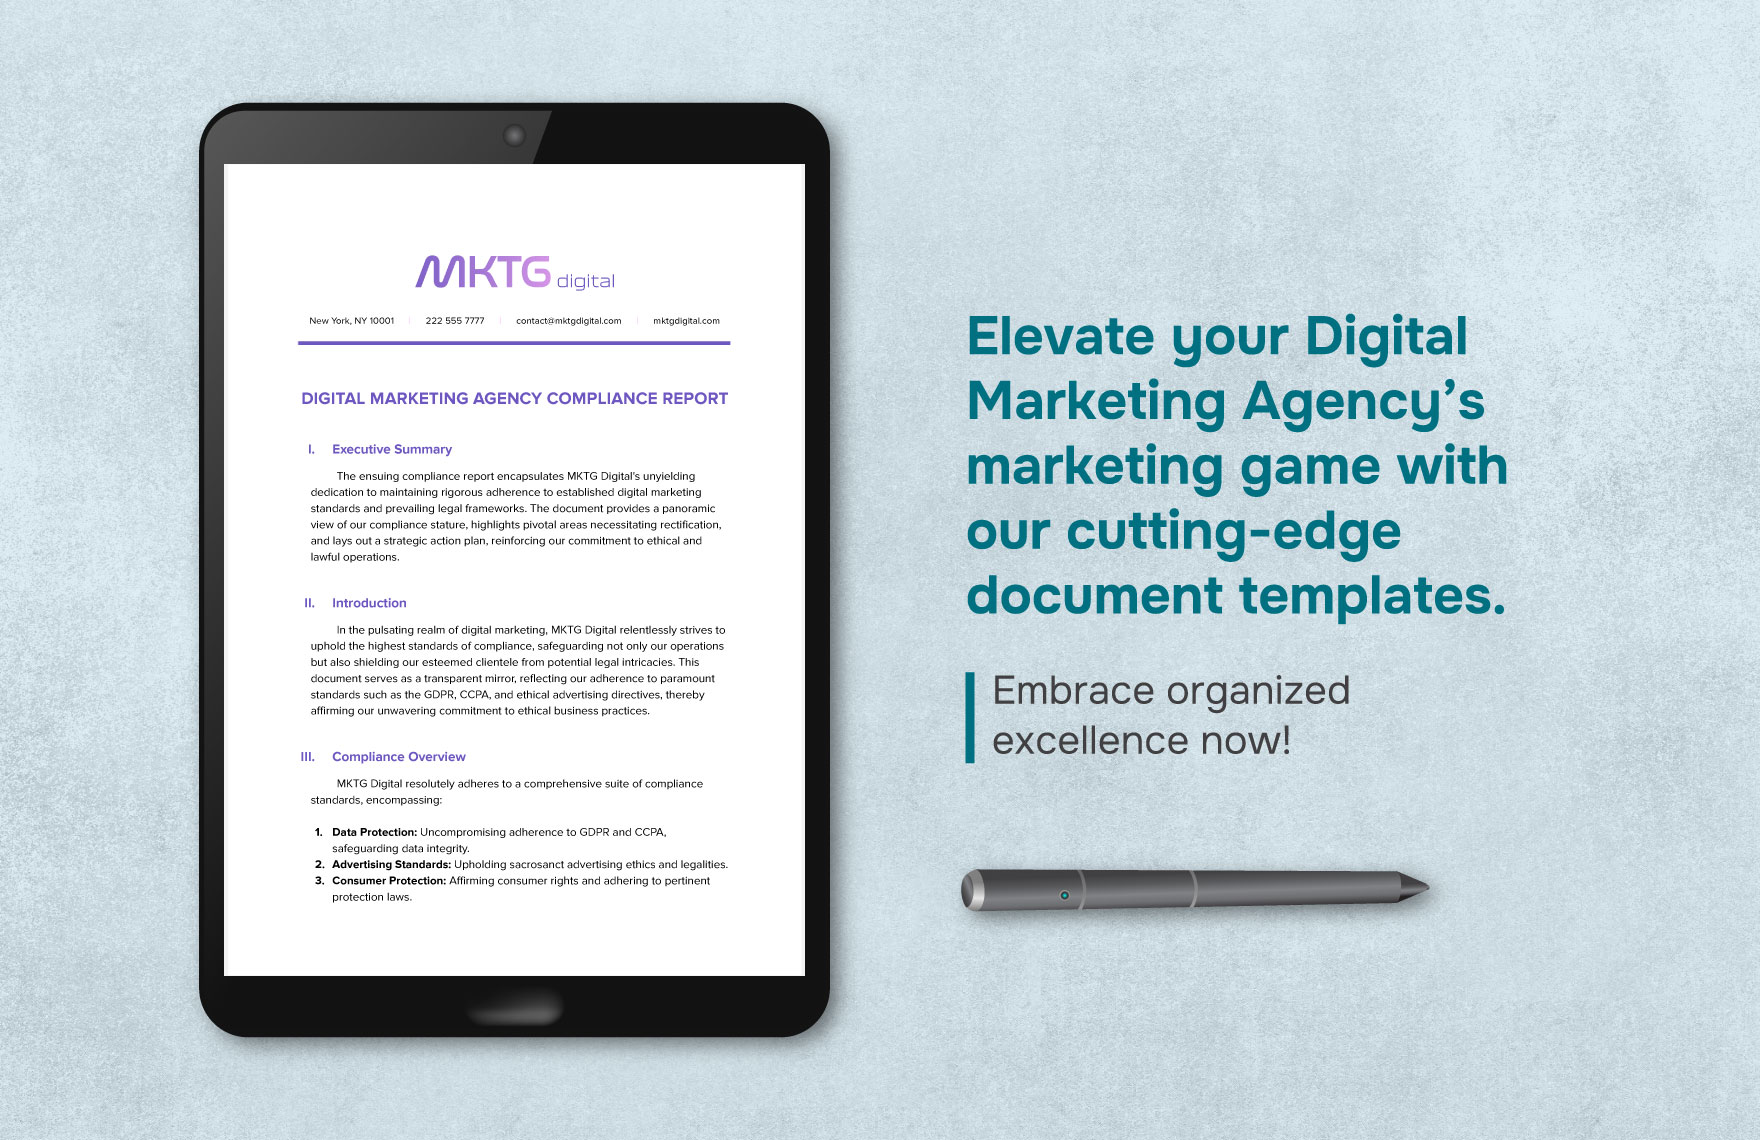 Digital Marketing Agency Compliance Report Template